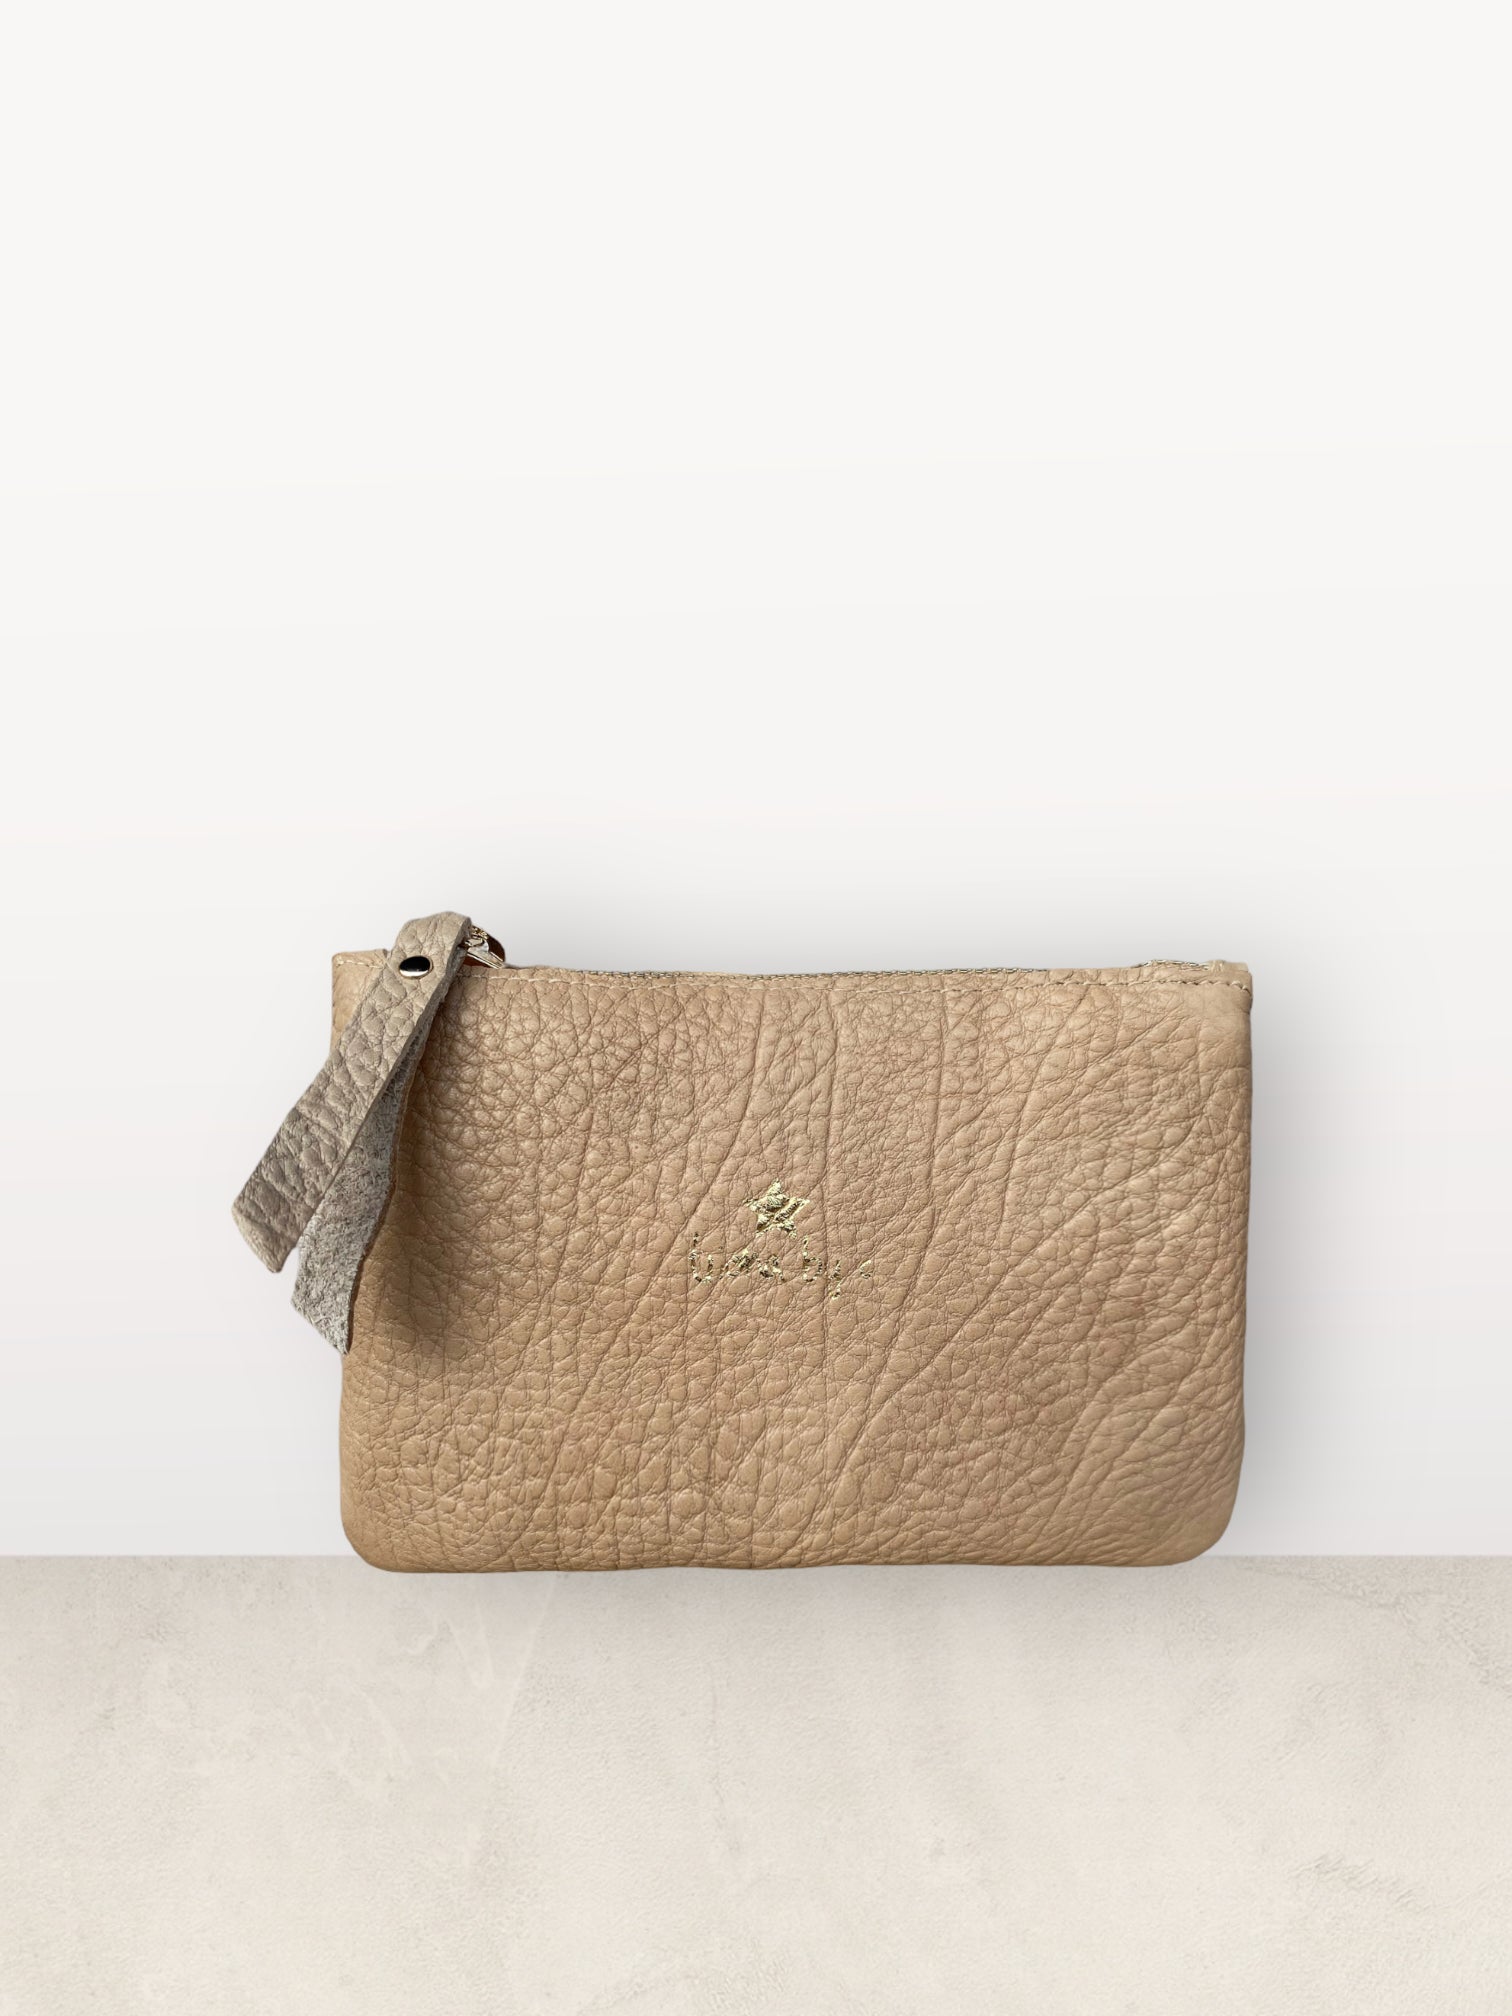 Camel leather wallet